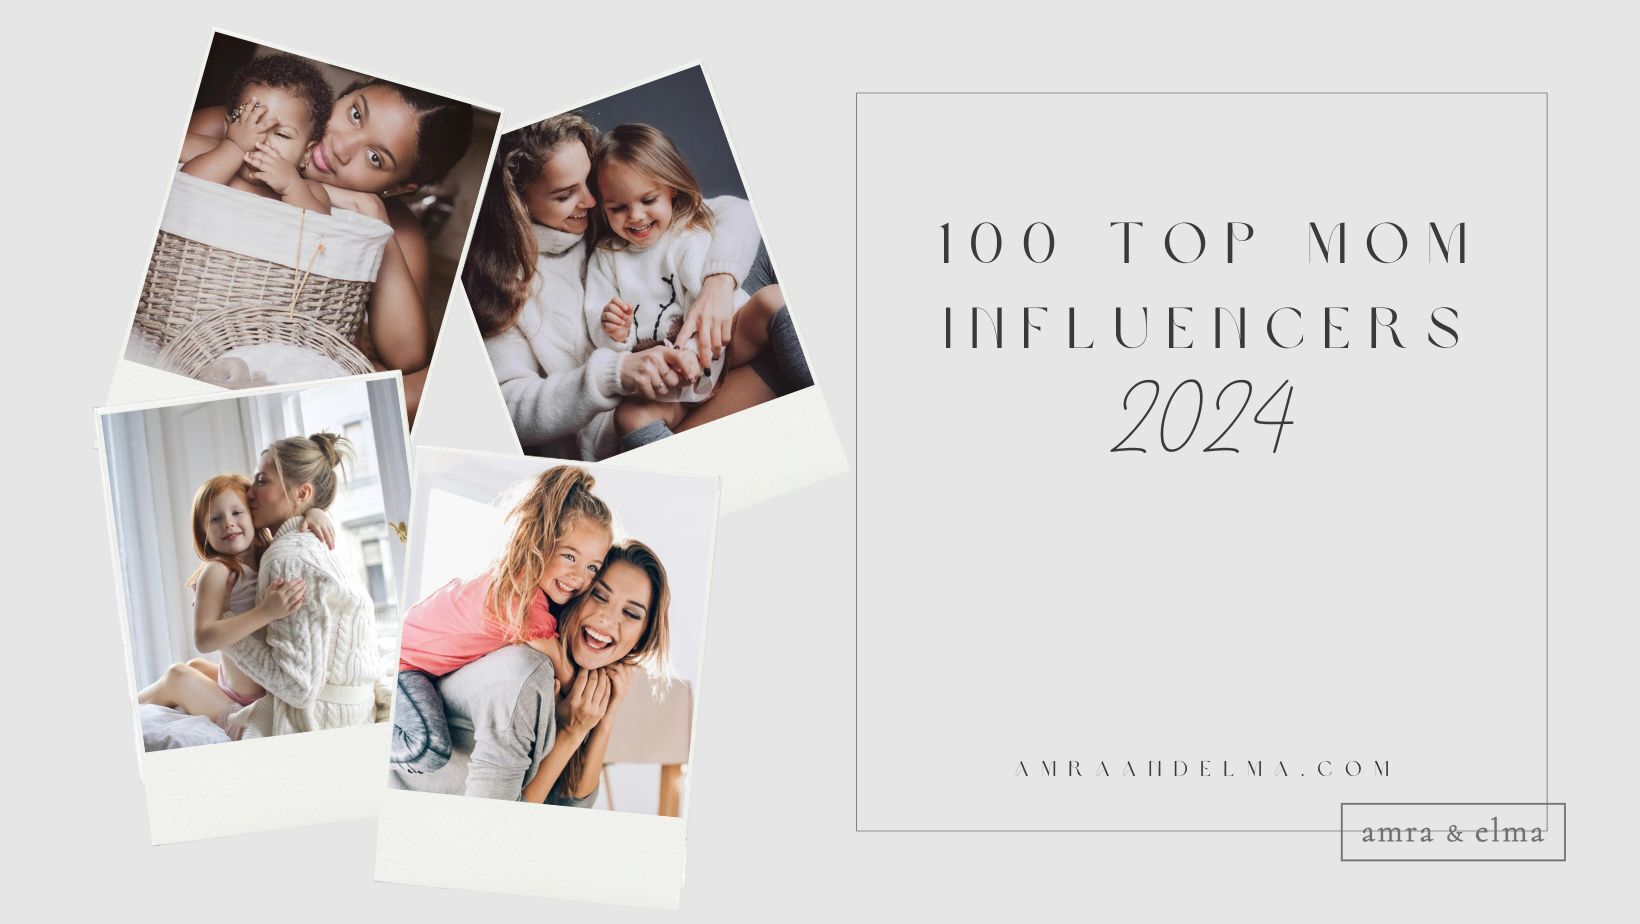 100 top mom influencers